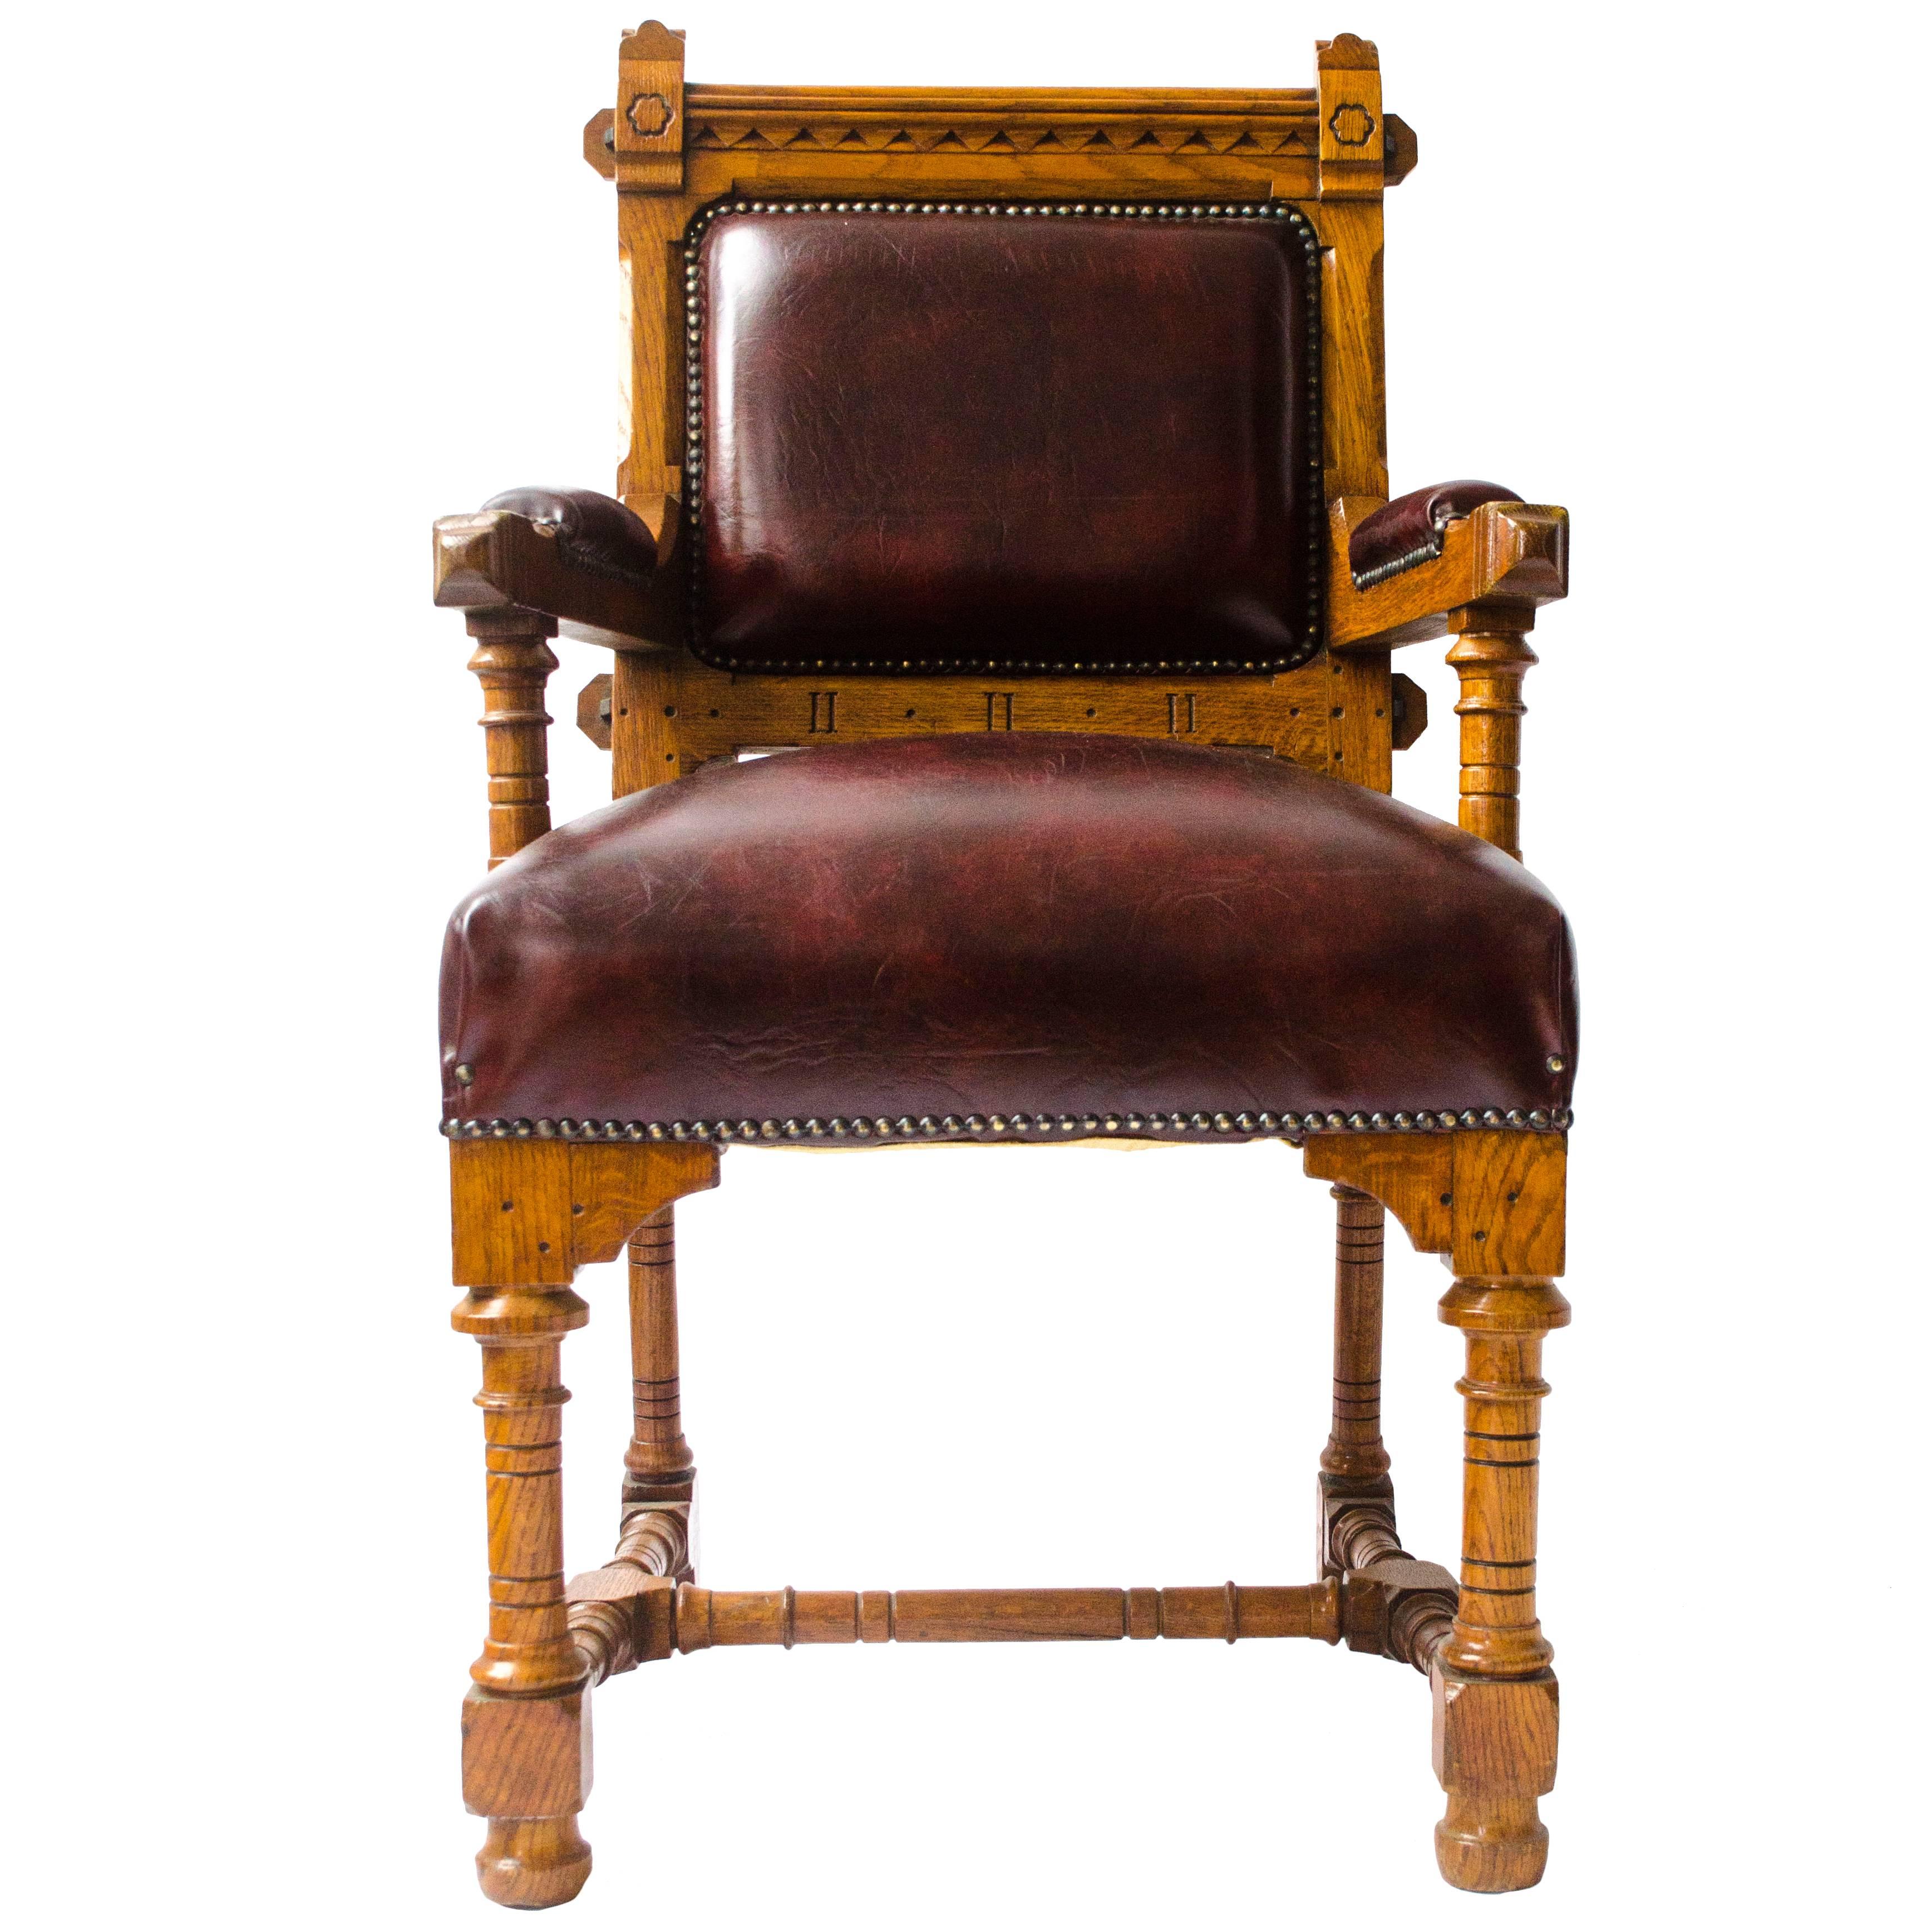 Gothic Revival Oak Armchair Designed by John Pollard Seddon For Seddon and Co. For Sale